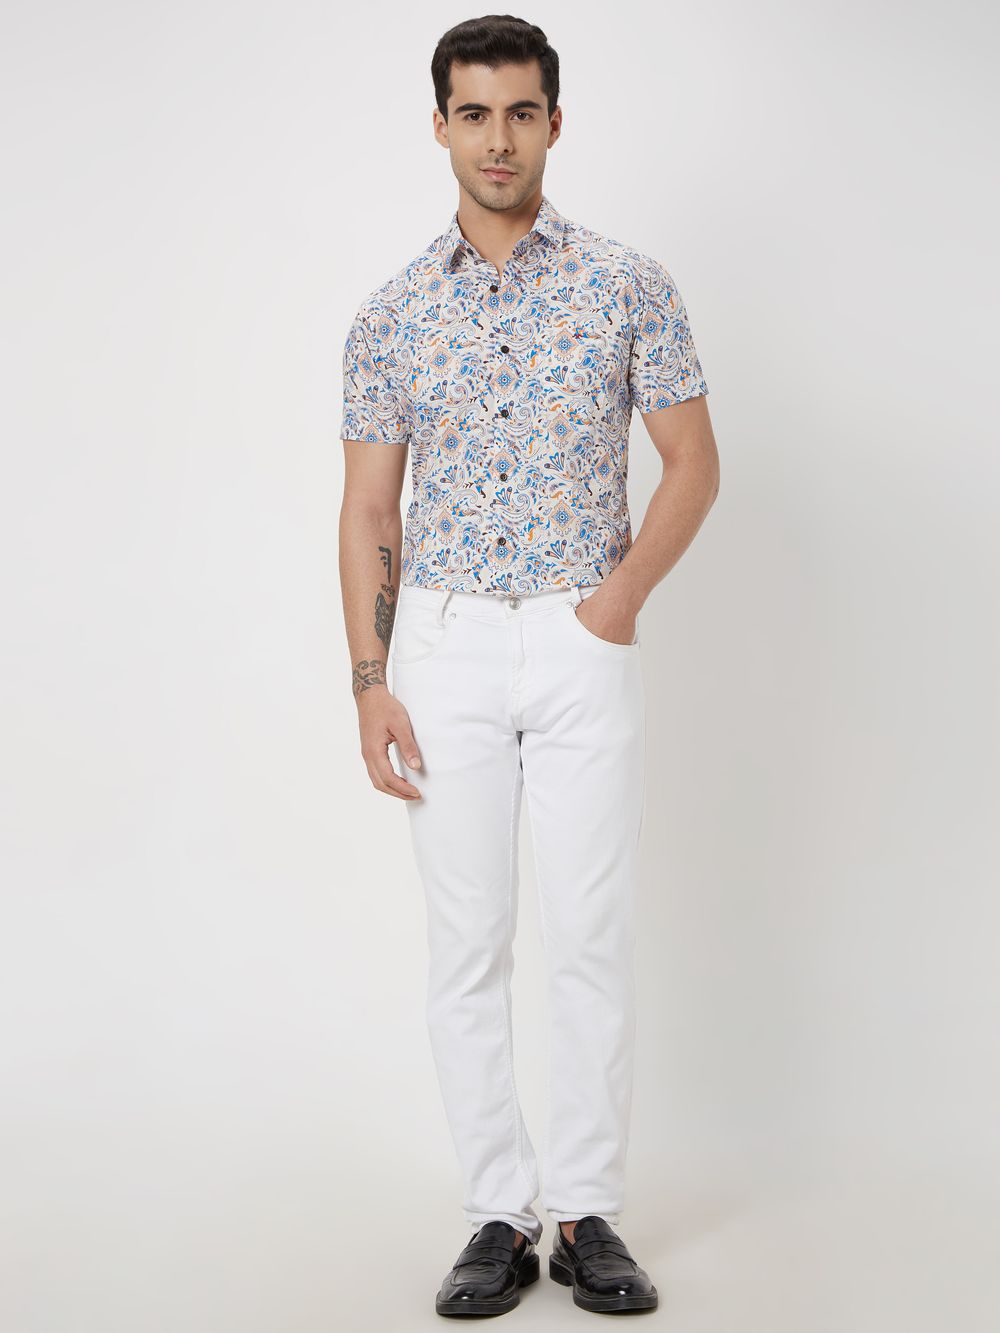 Off White & Multi Digital Print Slim Fit Casual Shirt